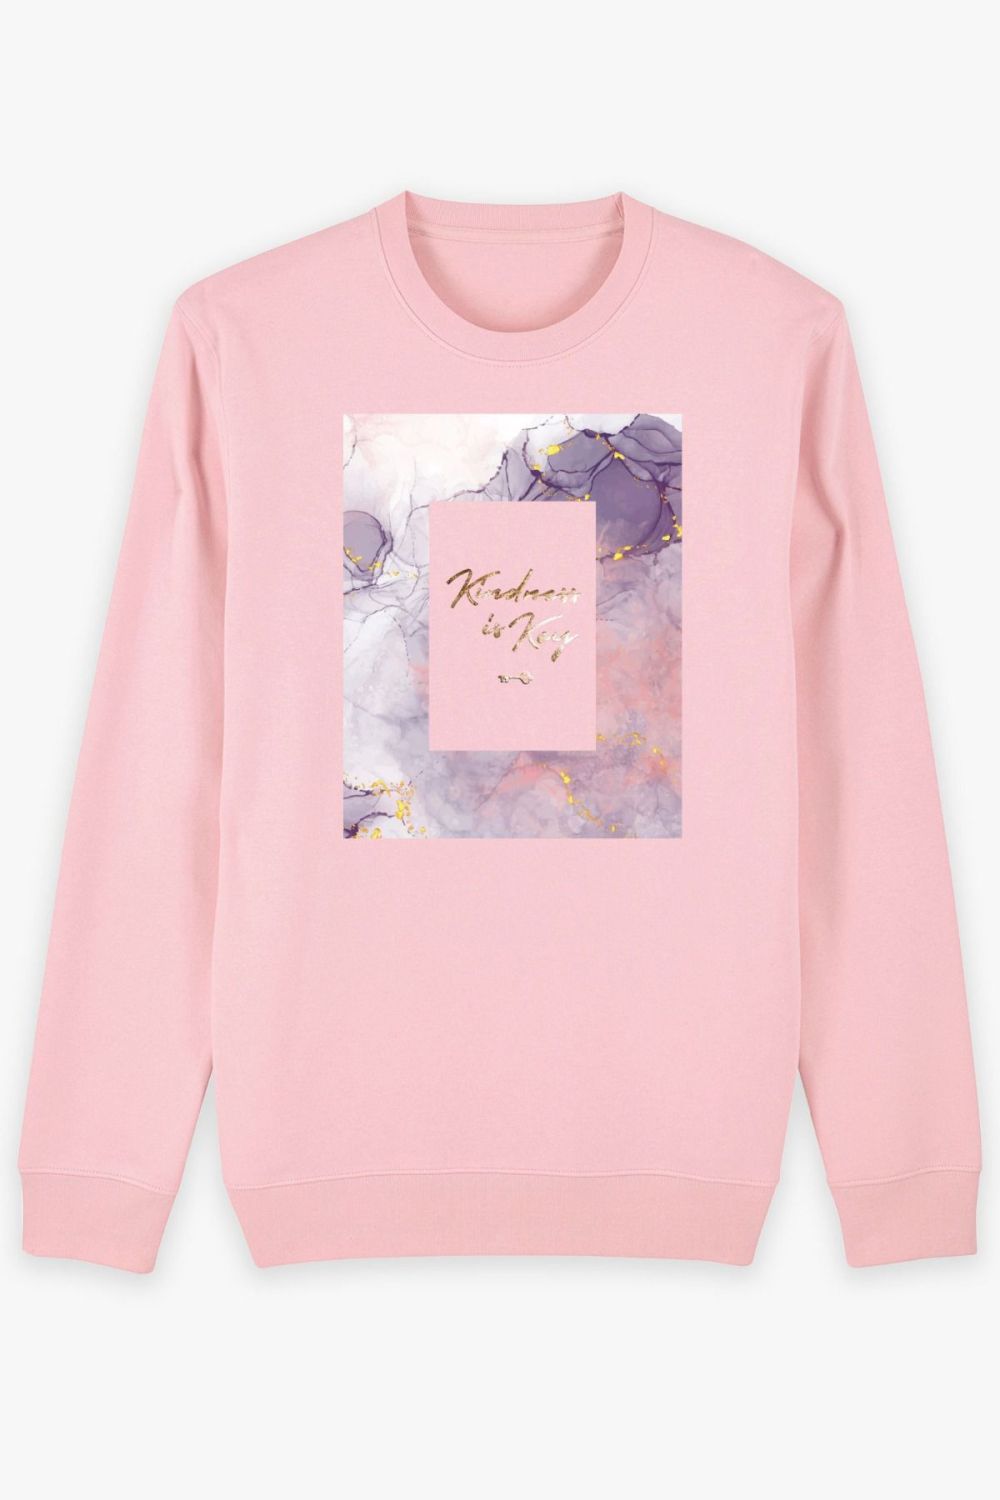 Kindness Is Key Foil Print Sweatshirt (Pack of 6)